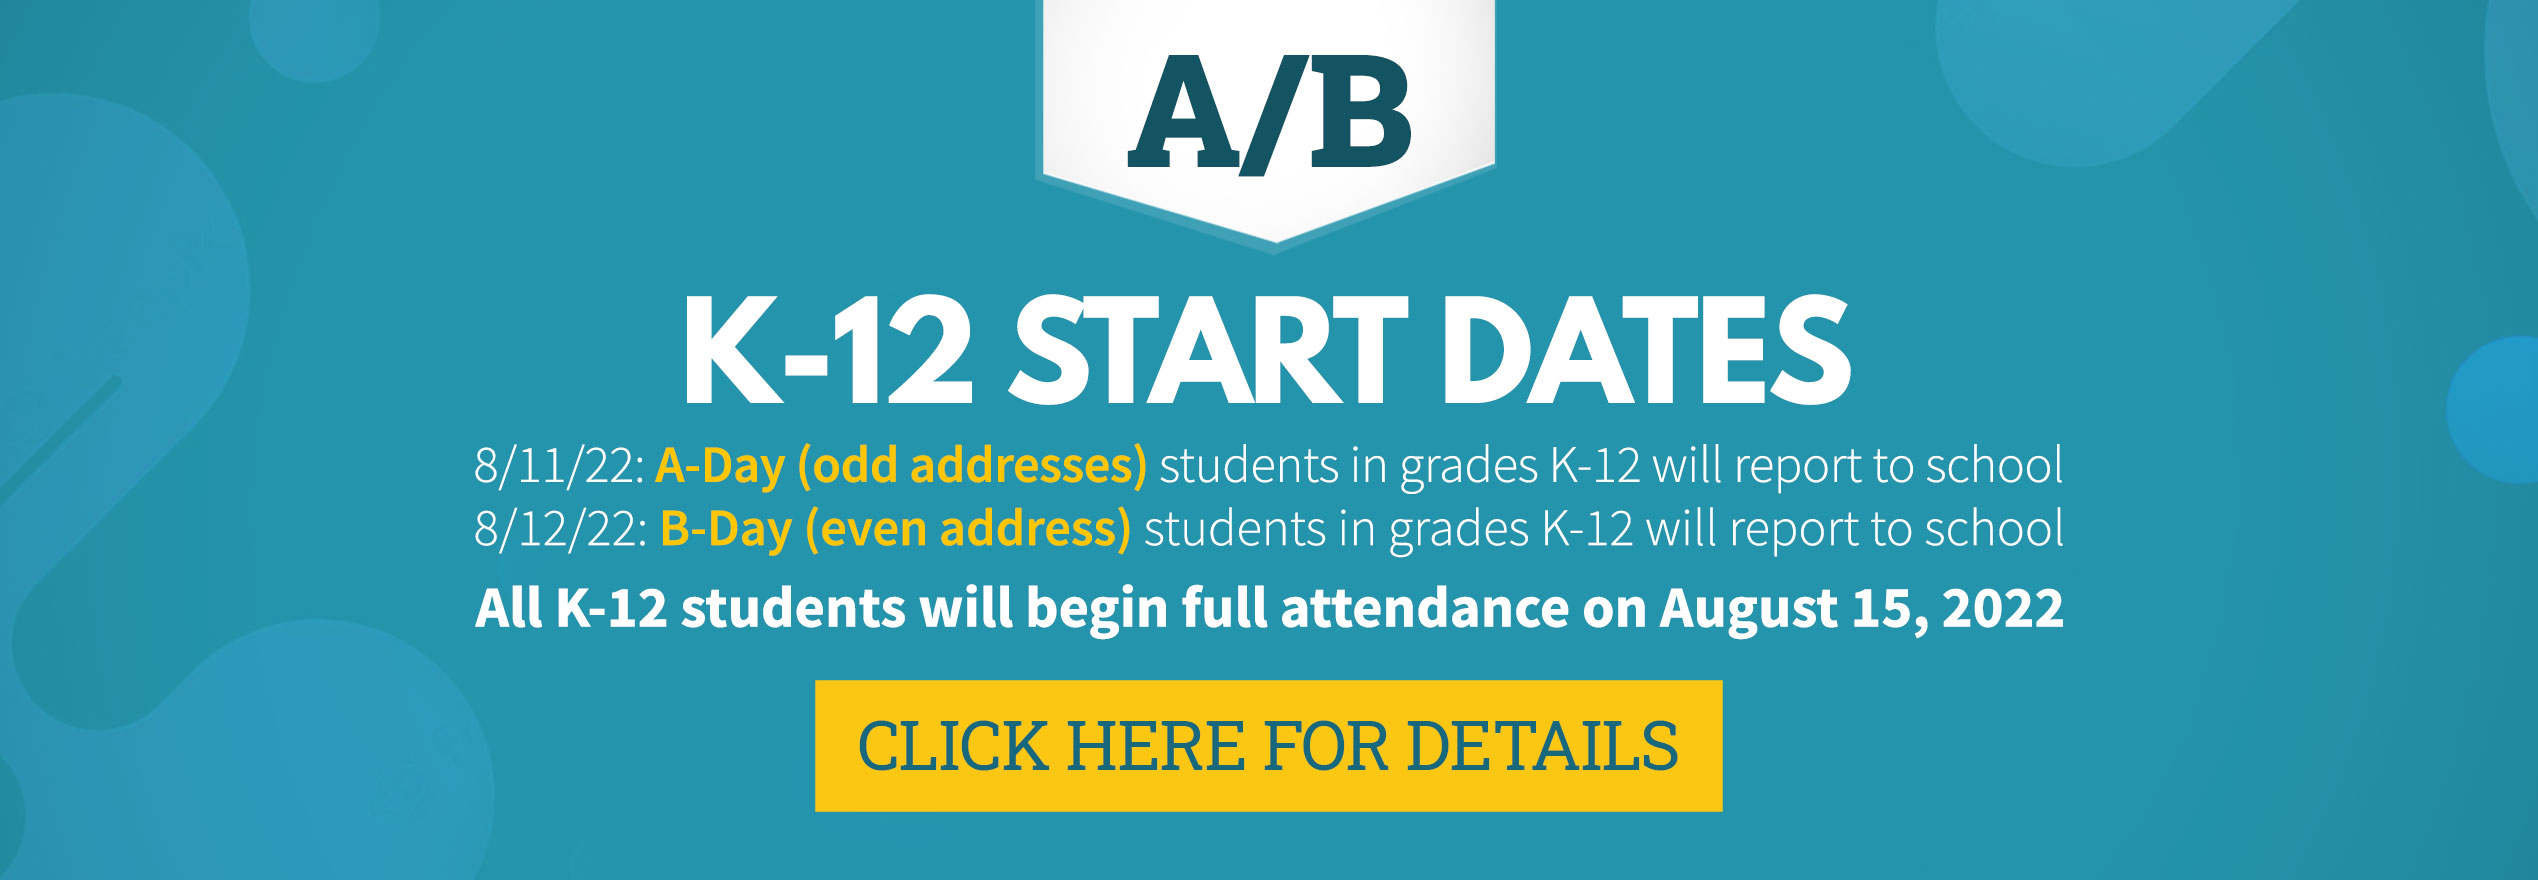 K-12 Start Dates